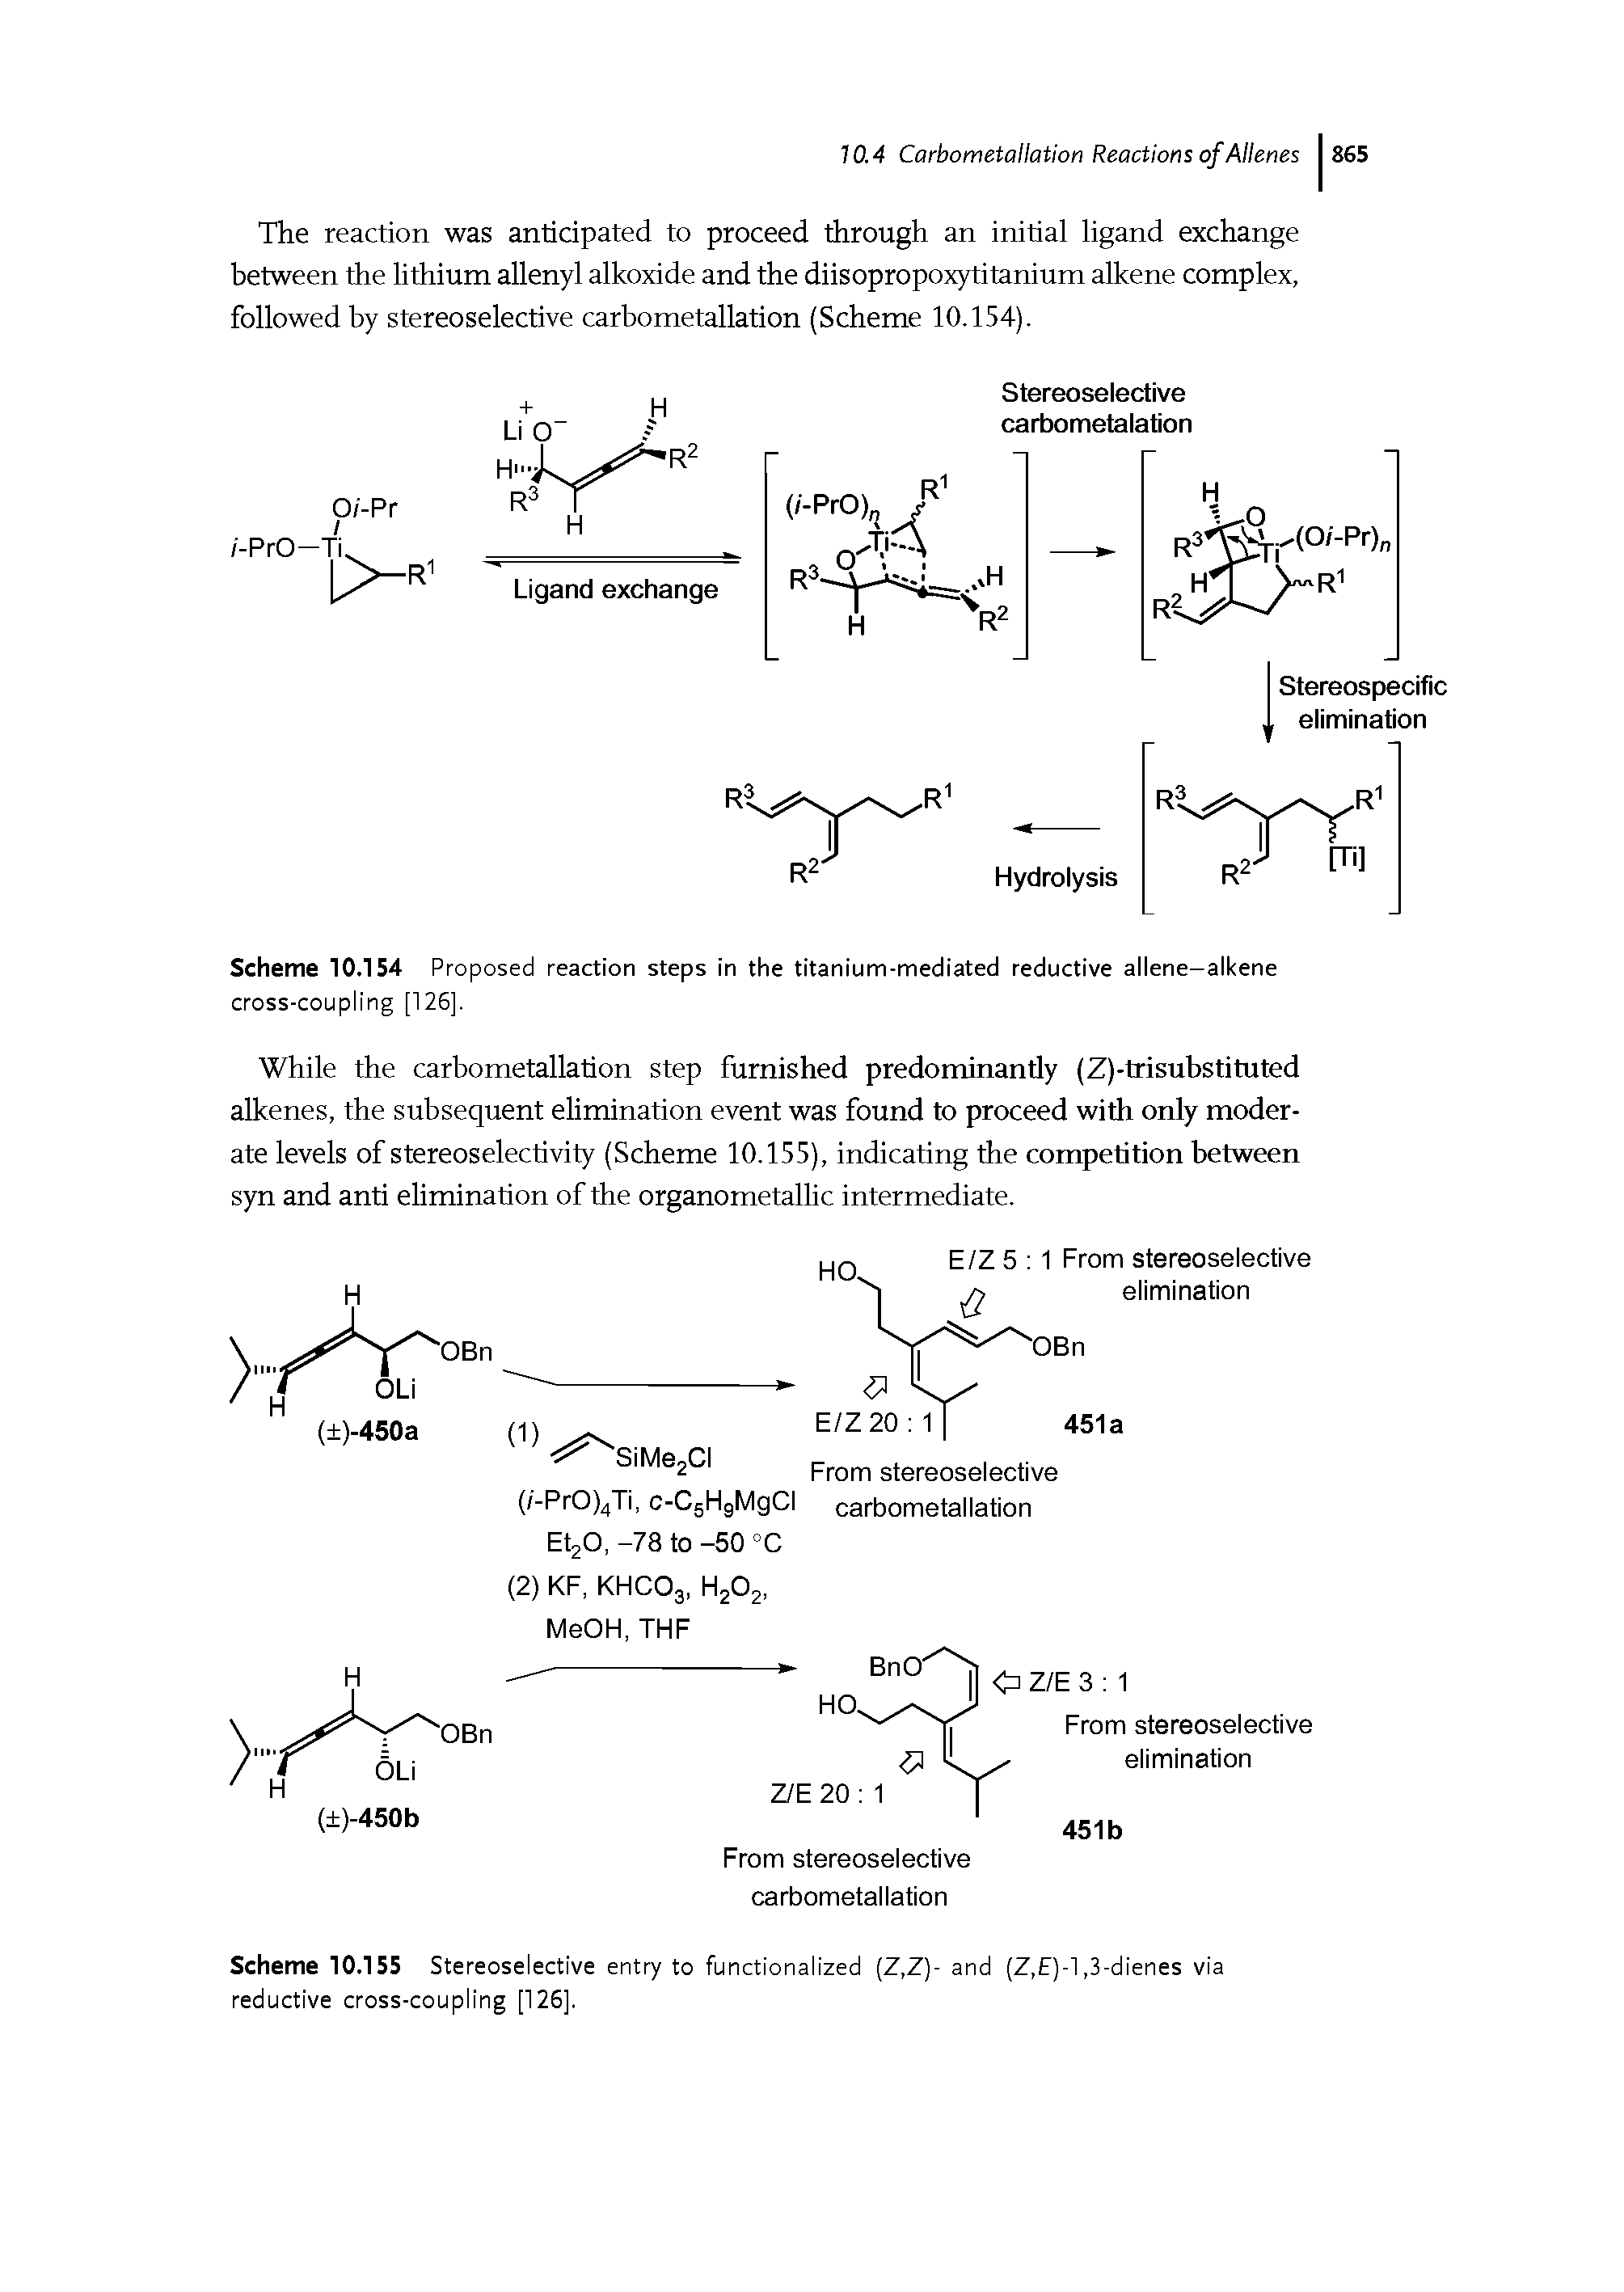 Scheme 10.154 Proposed reaction steps in the titanium-mediated reductive allene-alkene cross-coupling [125].